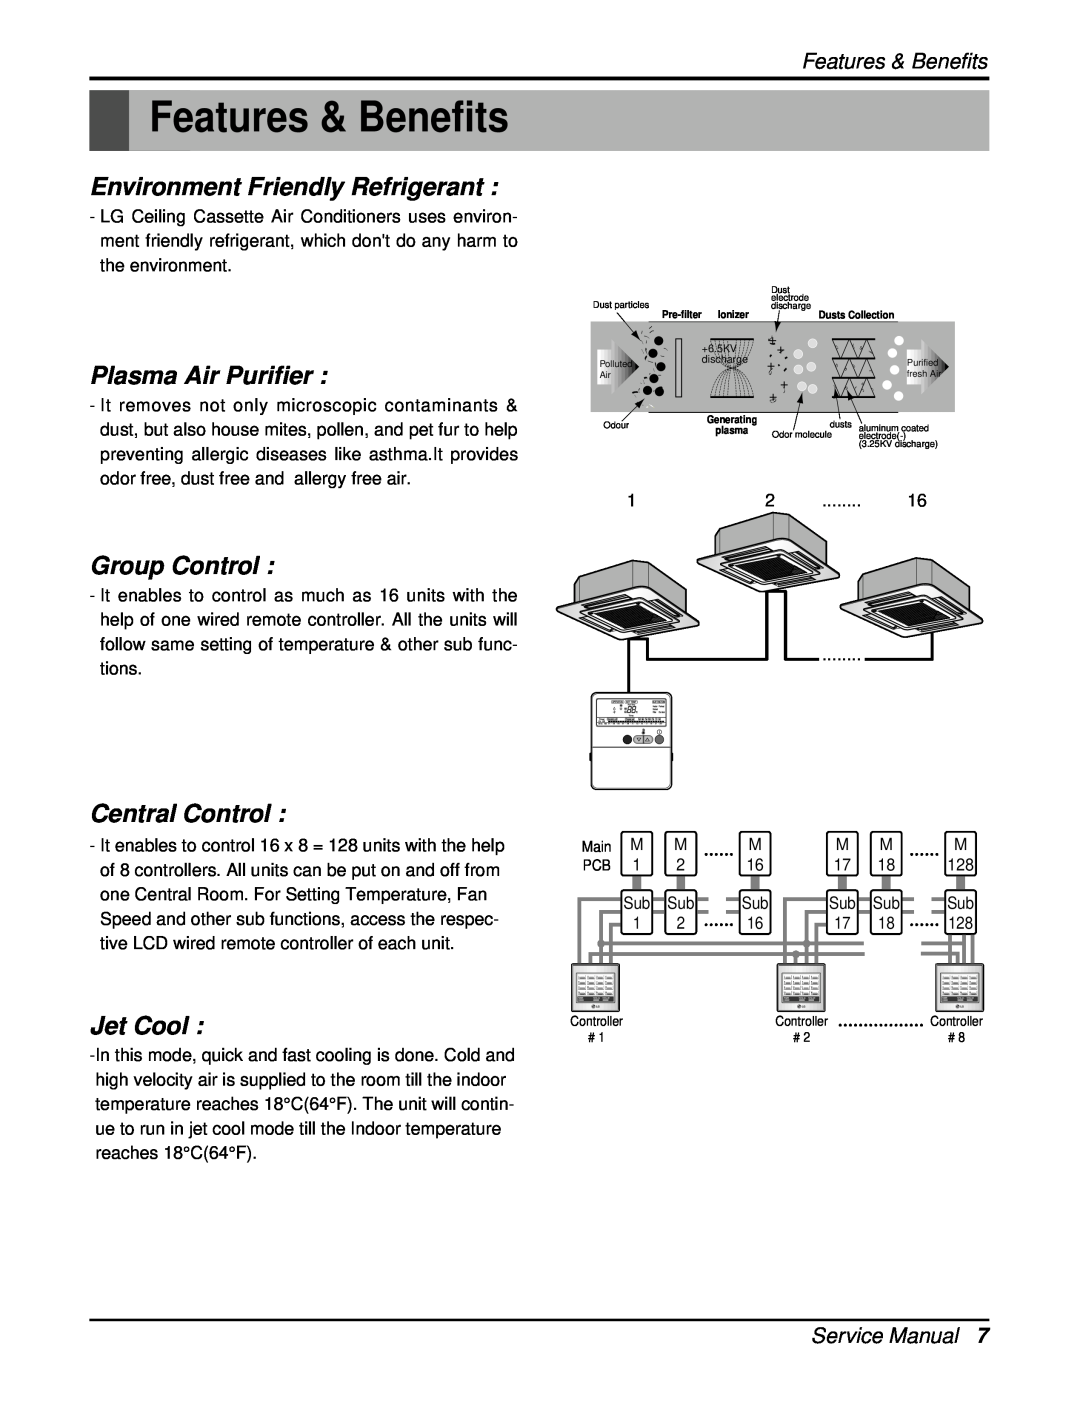 Heat Controller DMC36CA-1 manual Features & Benefits, Environment Friendly Refrigerant, Plasma Air Purifier, Group Control 